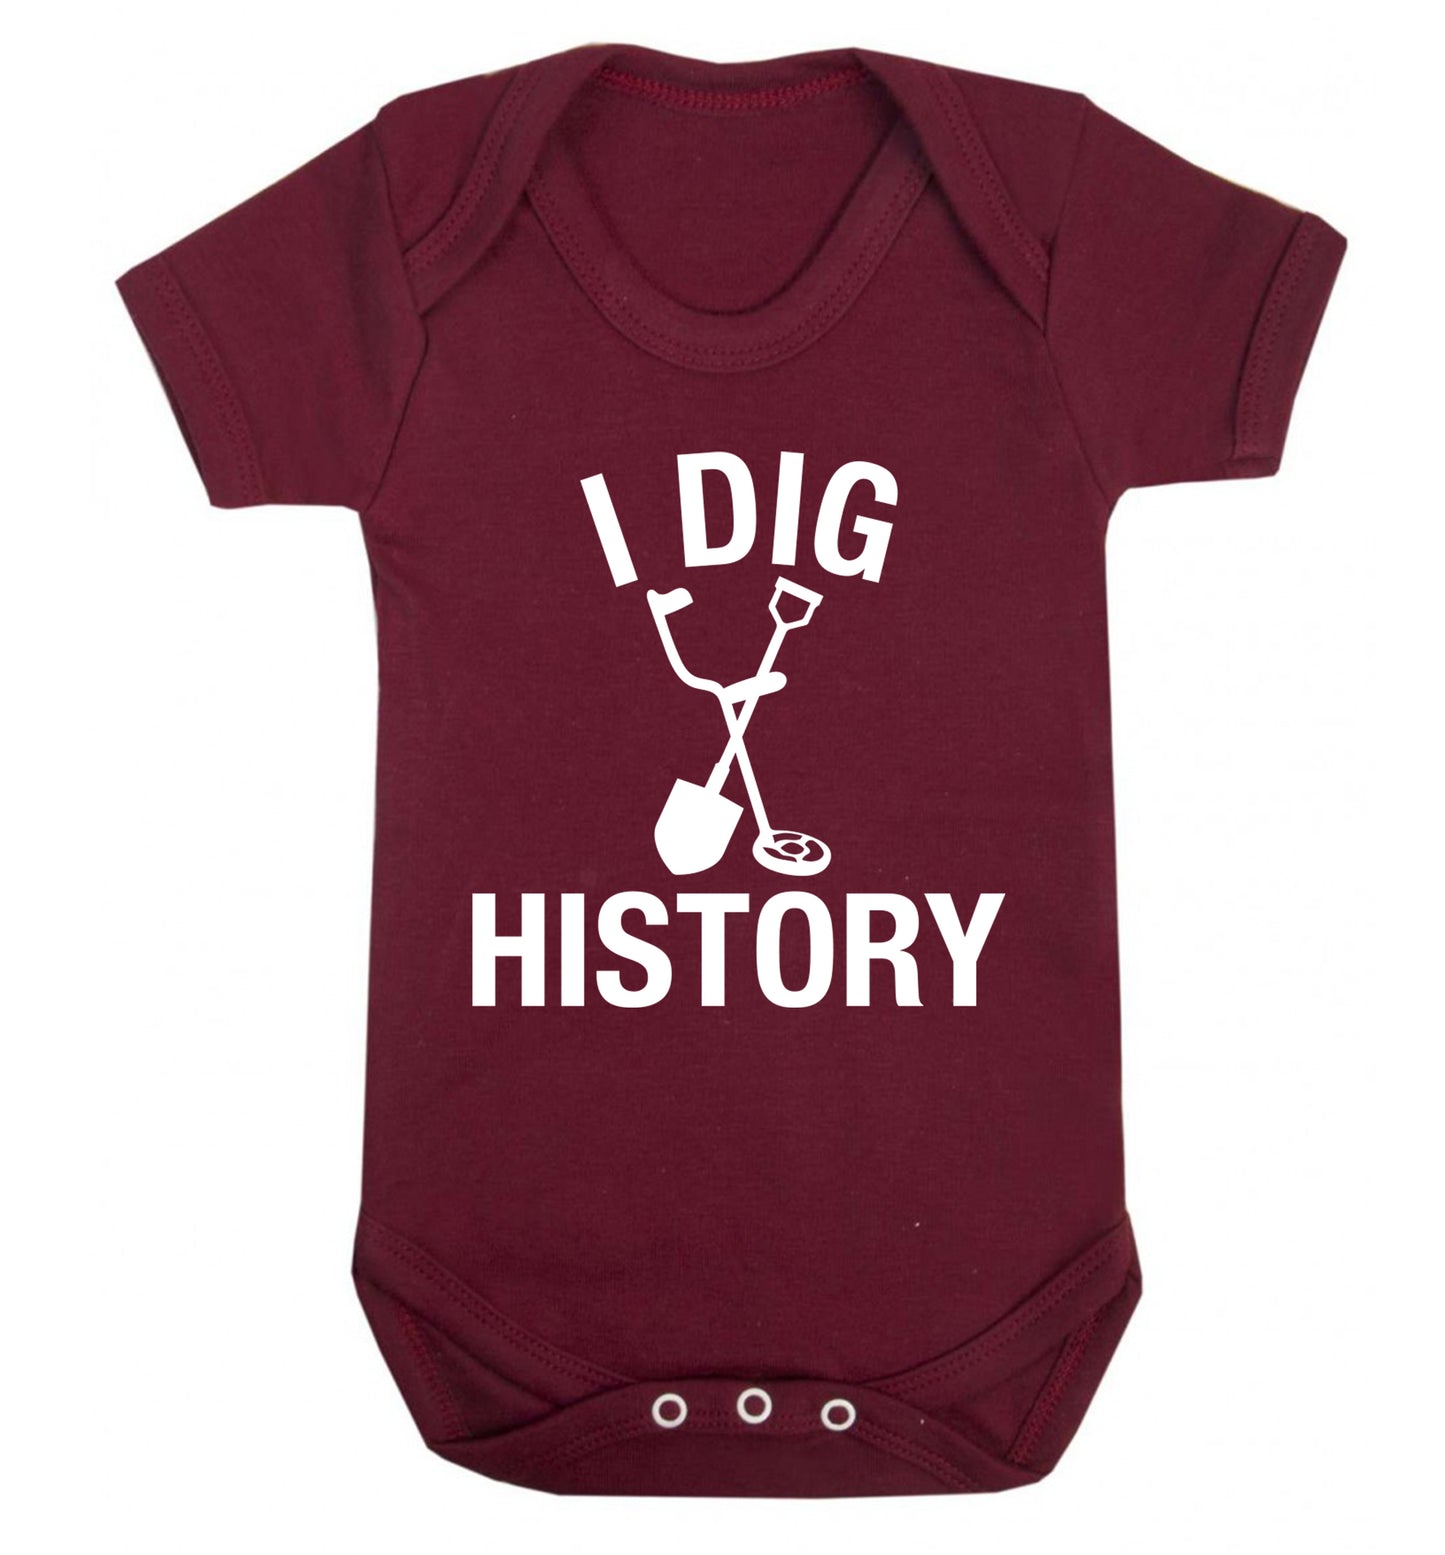 I dig history Baby Vest maroon 18-24 months